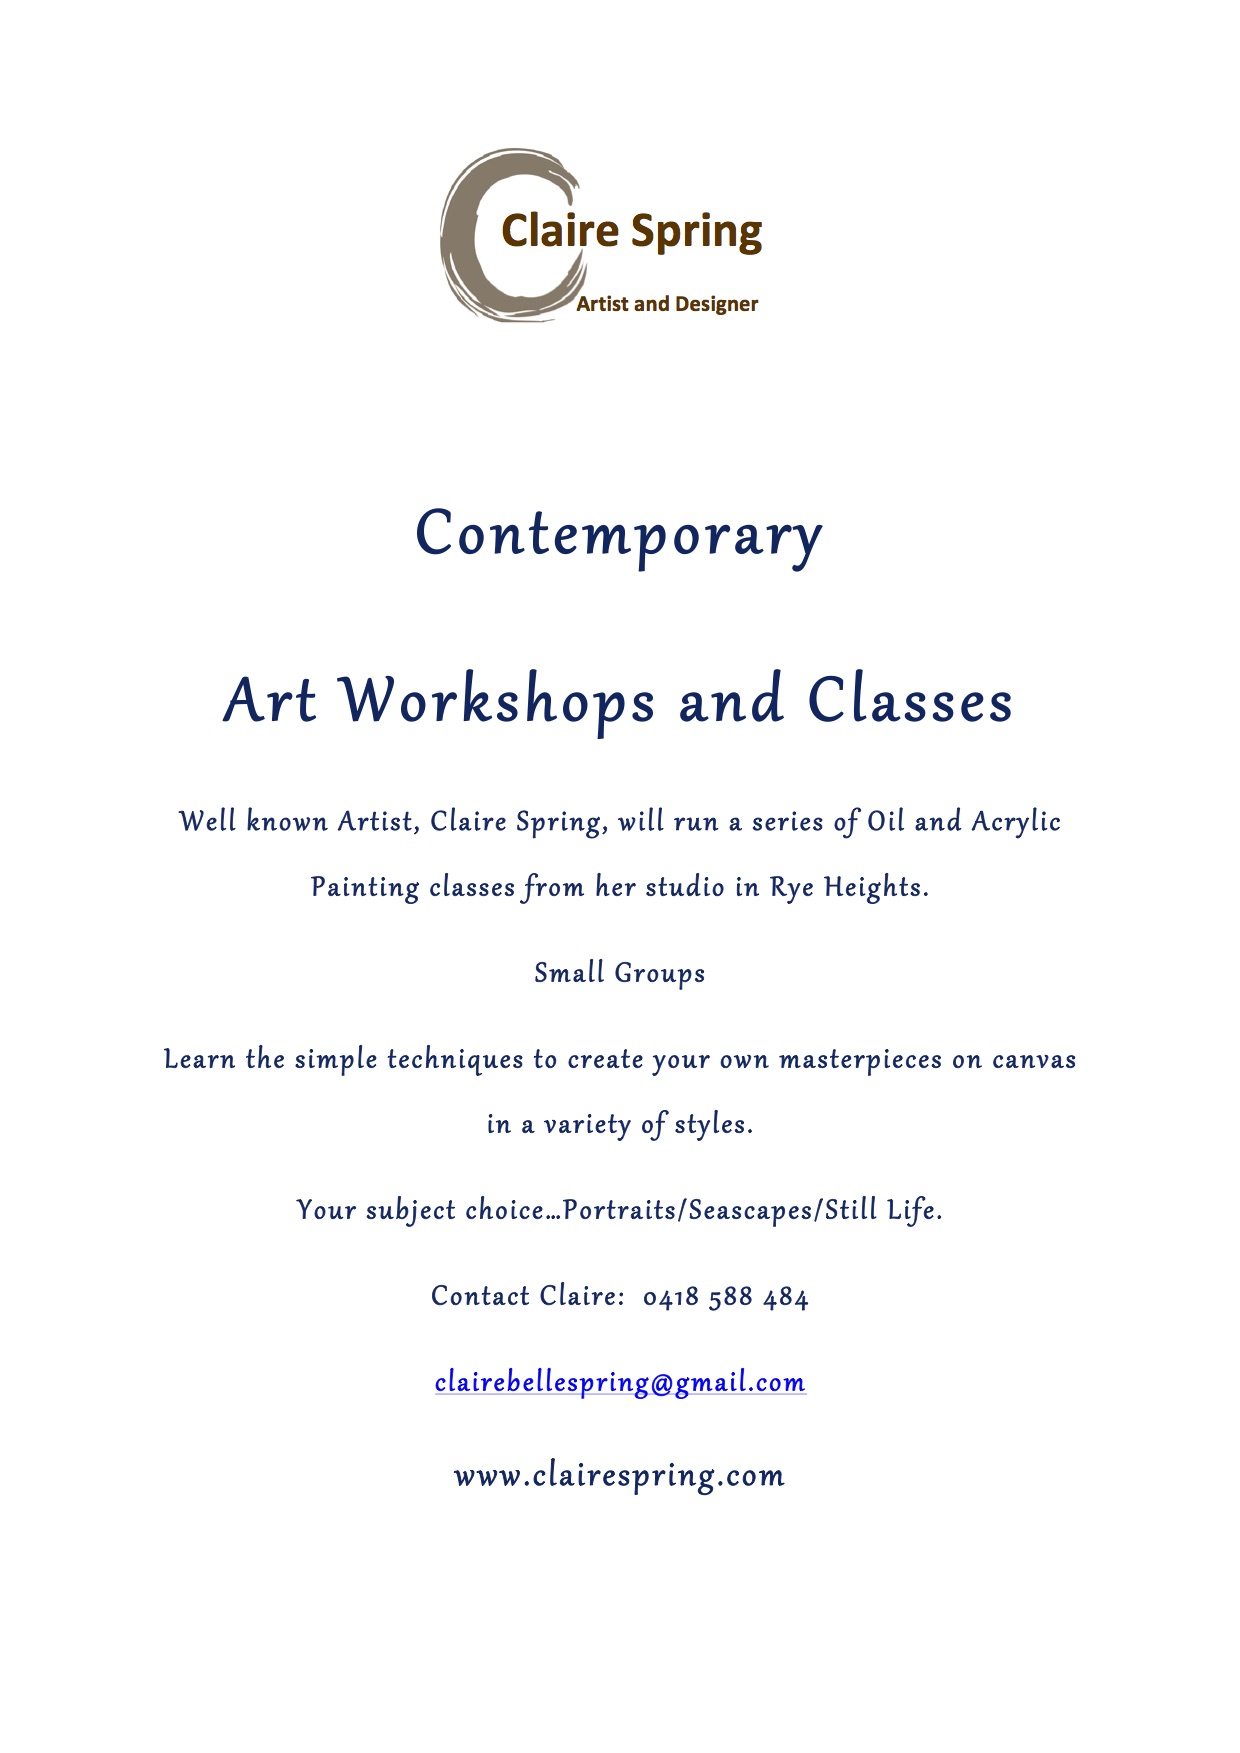 Flyer Art Classes and Workshop (1)